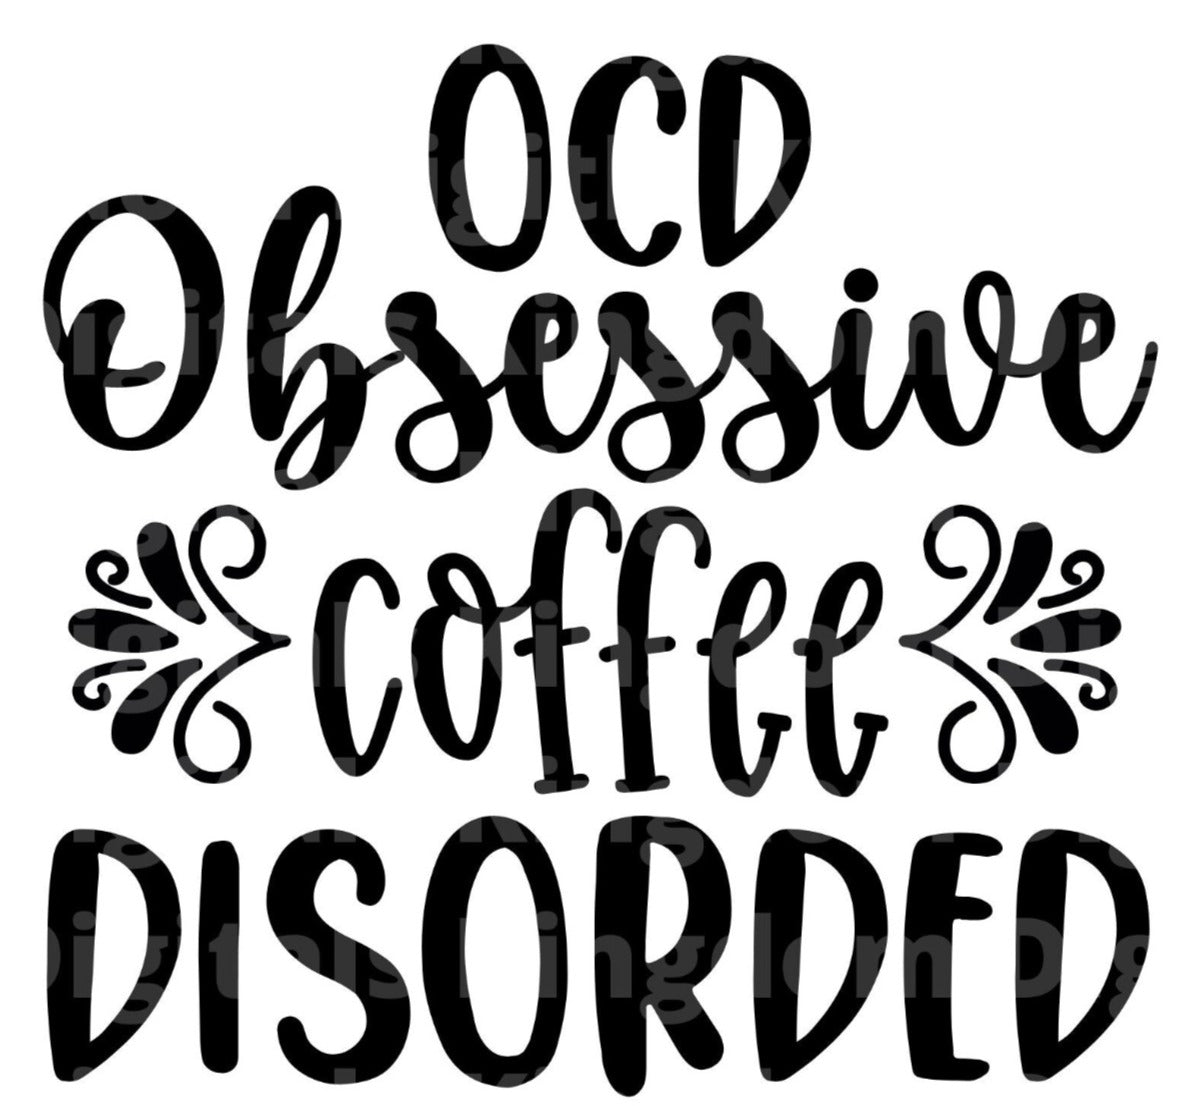 OCD Obsessive Coffee Disorder SVG Cut File